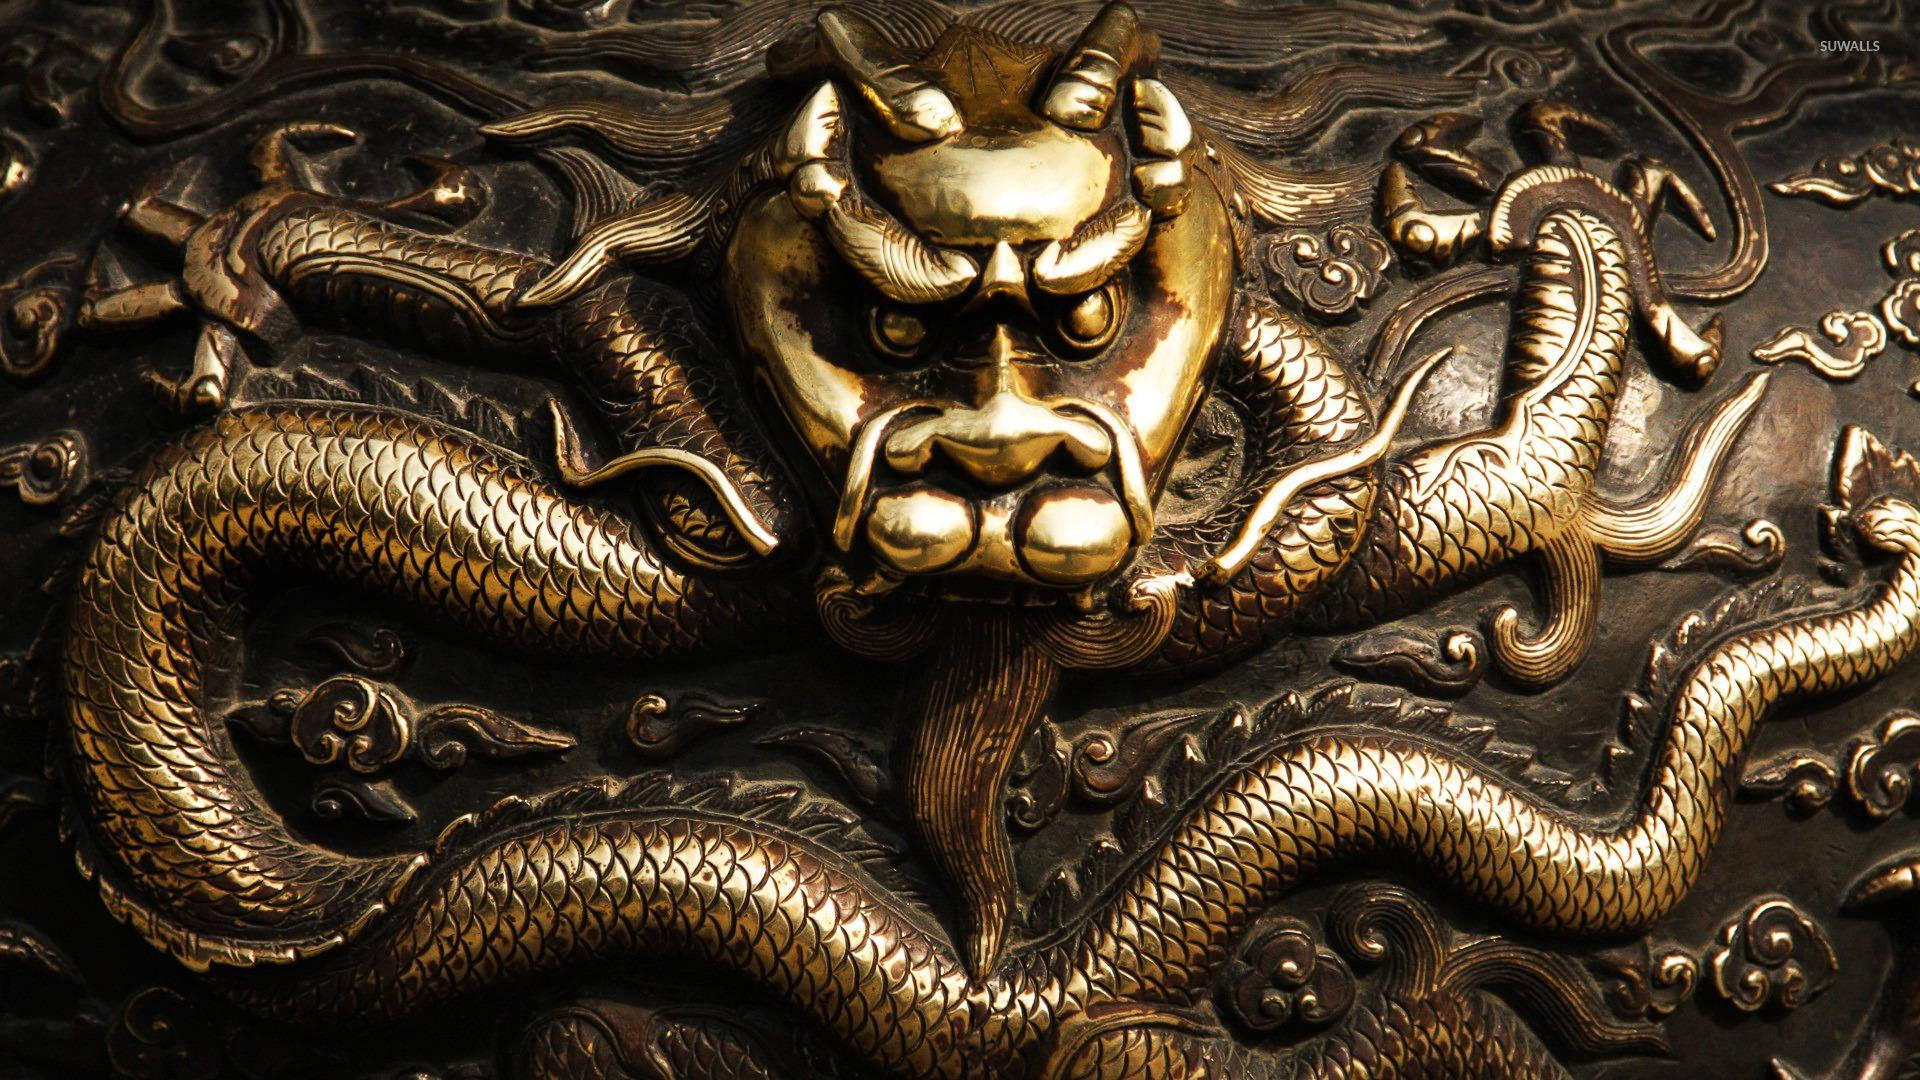 Majestic Golden Dragon in Its Full Glory Wallpaper